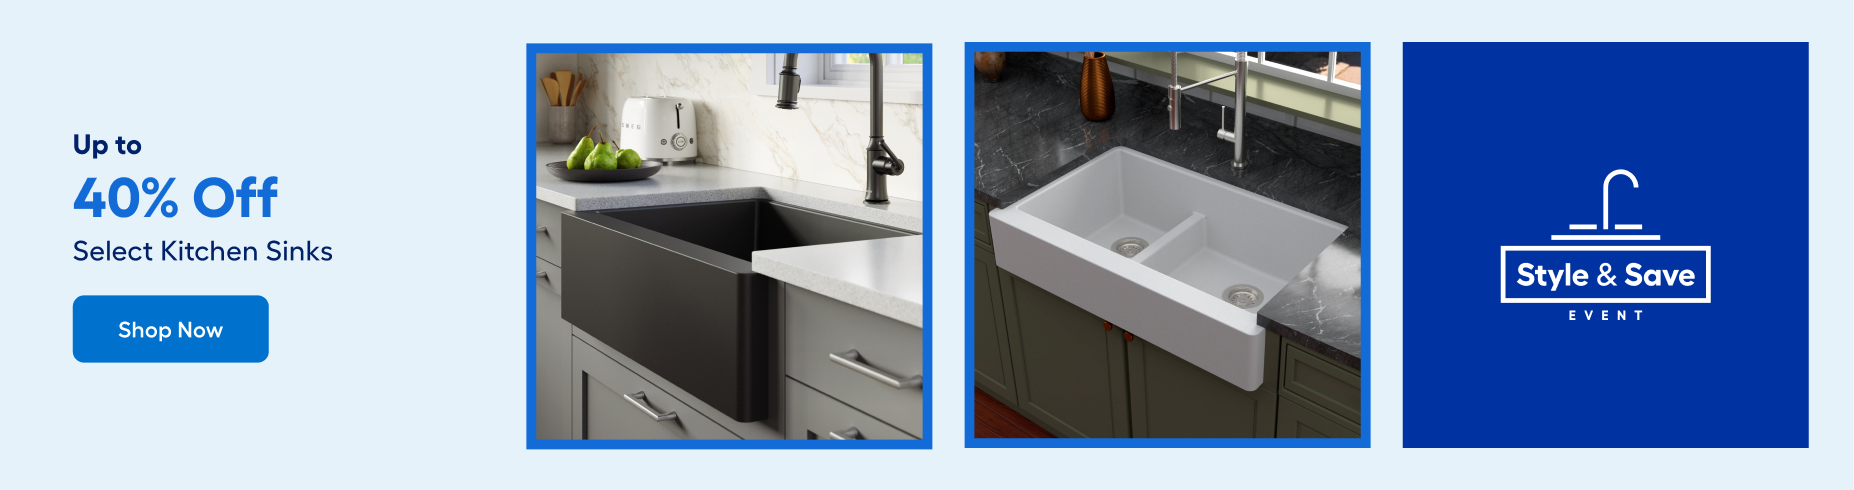 Waterfall Sink Kitchen Stainless Steel Topmount Sink lavabo – BLIOTE